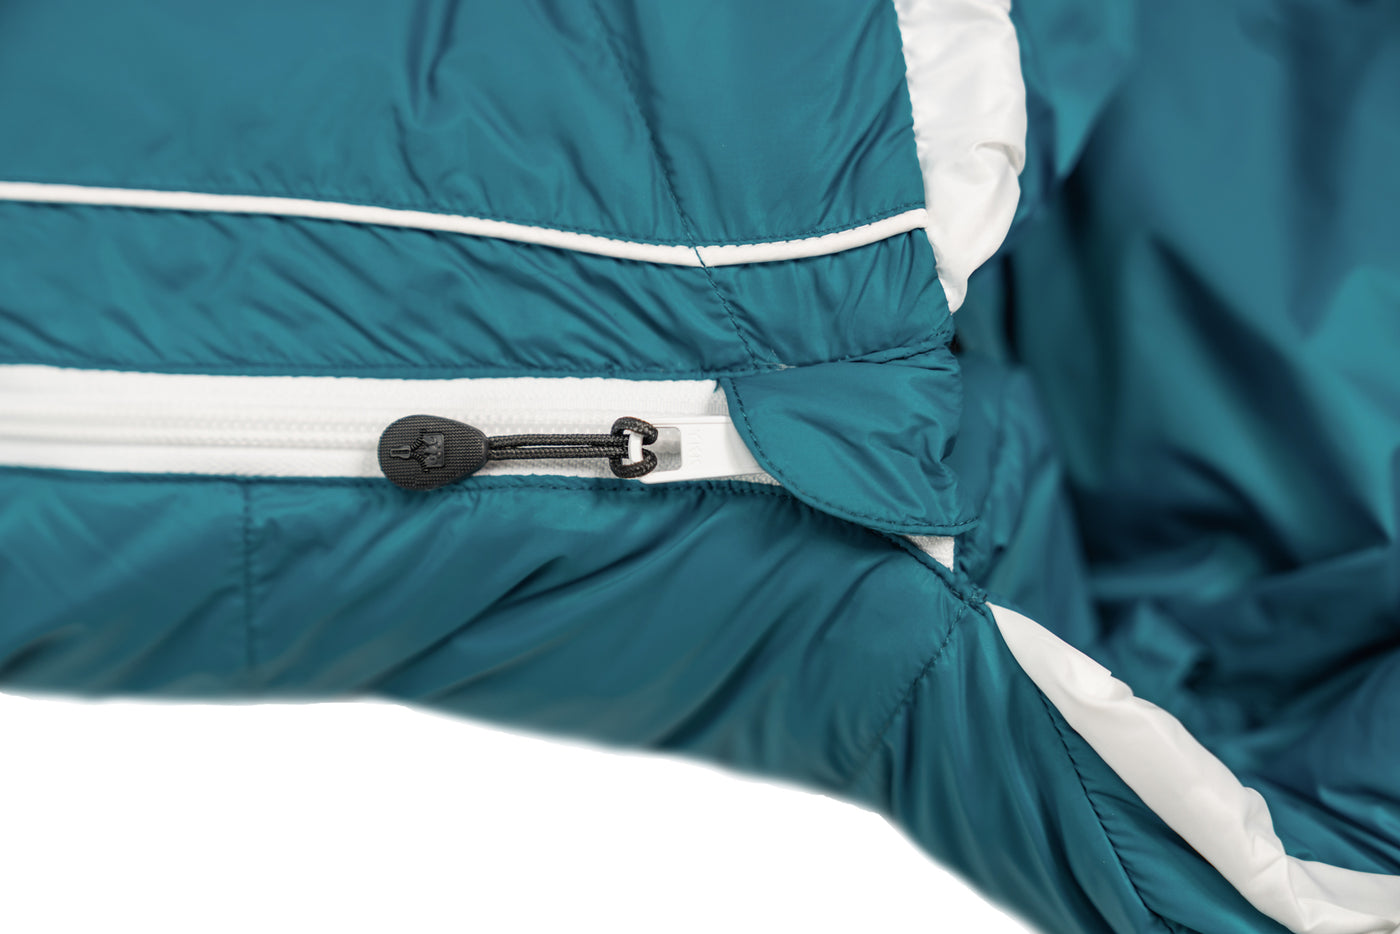 Grüezi bag Daunenschlafsack Biopod DownWool Subzero Comfort - Reißverschlussabdeckung